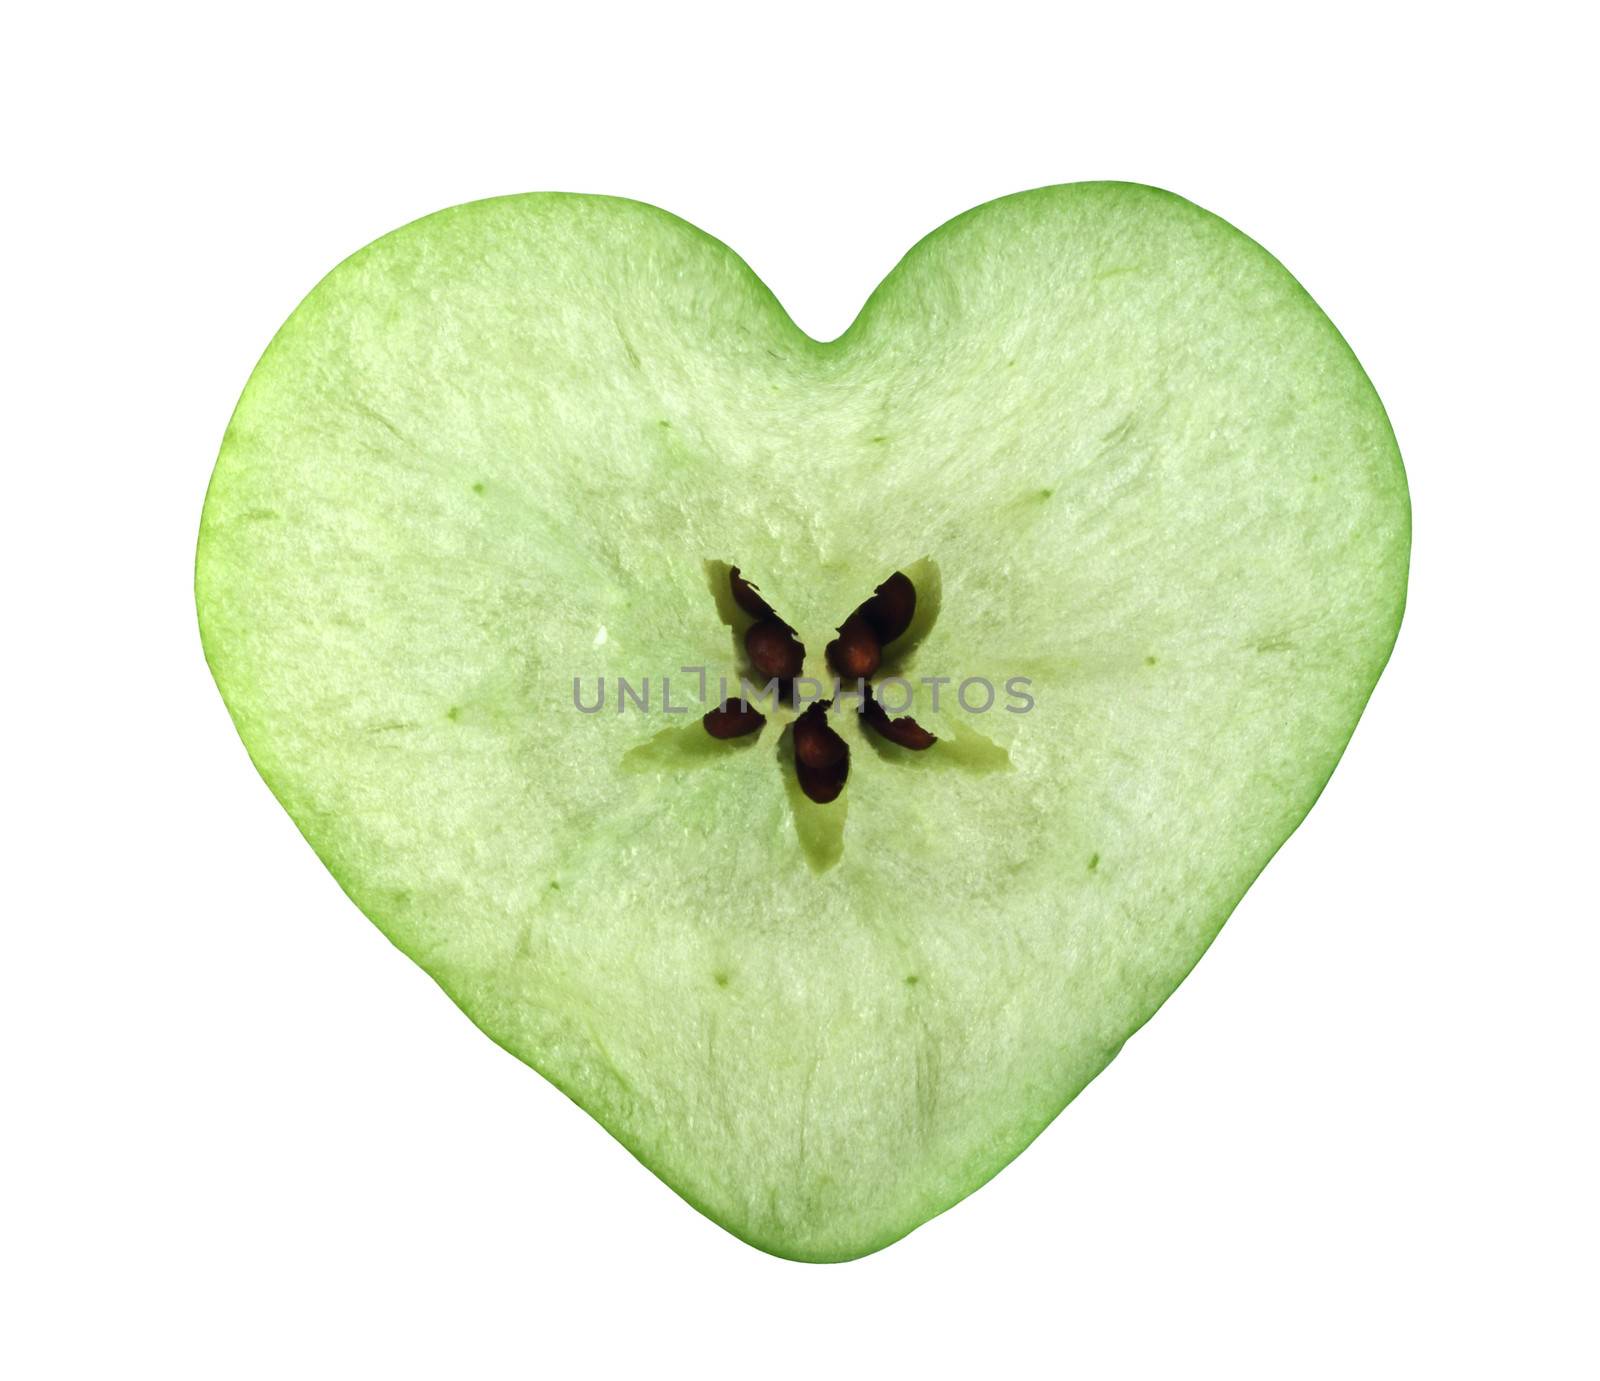 Green apple cross section shaped like heart on white background